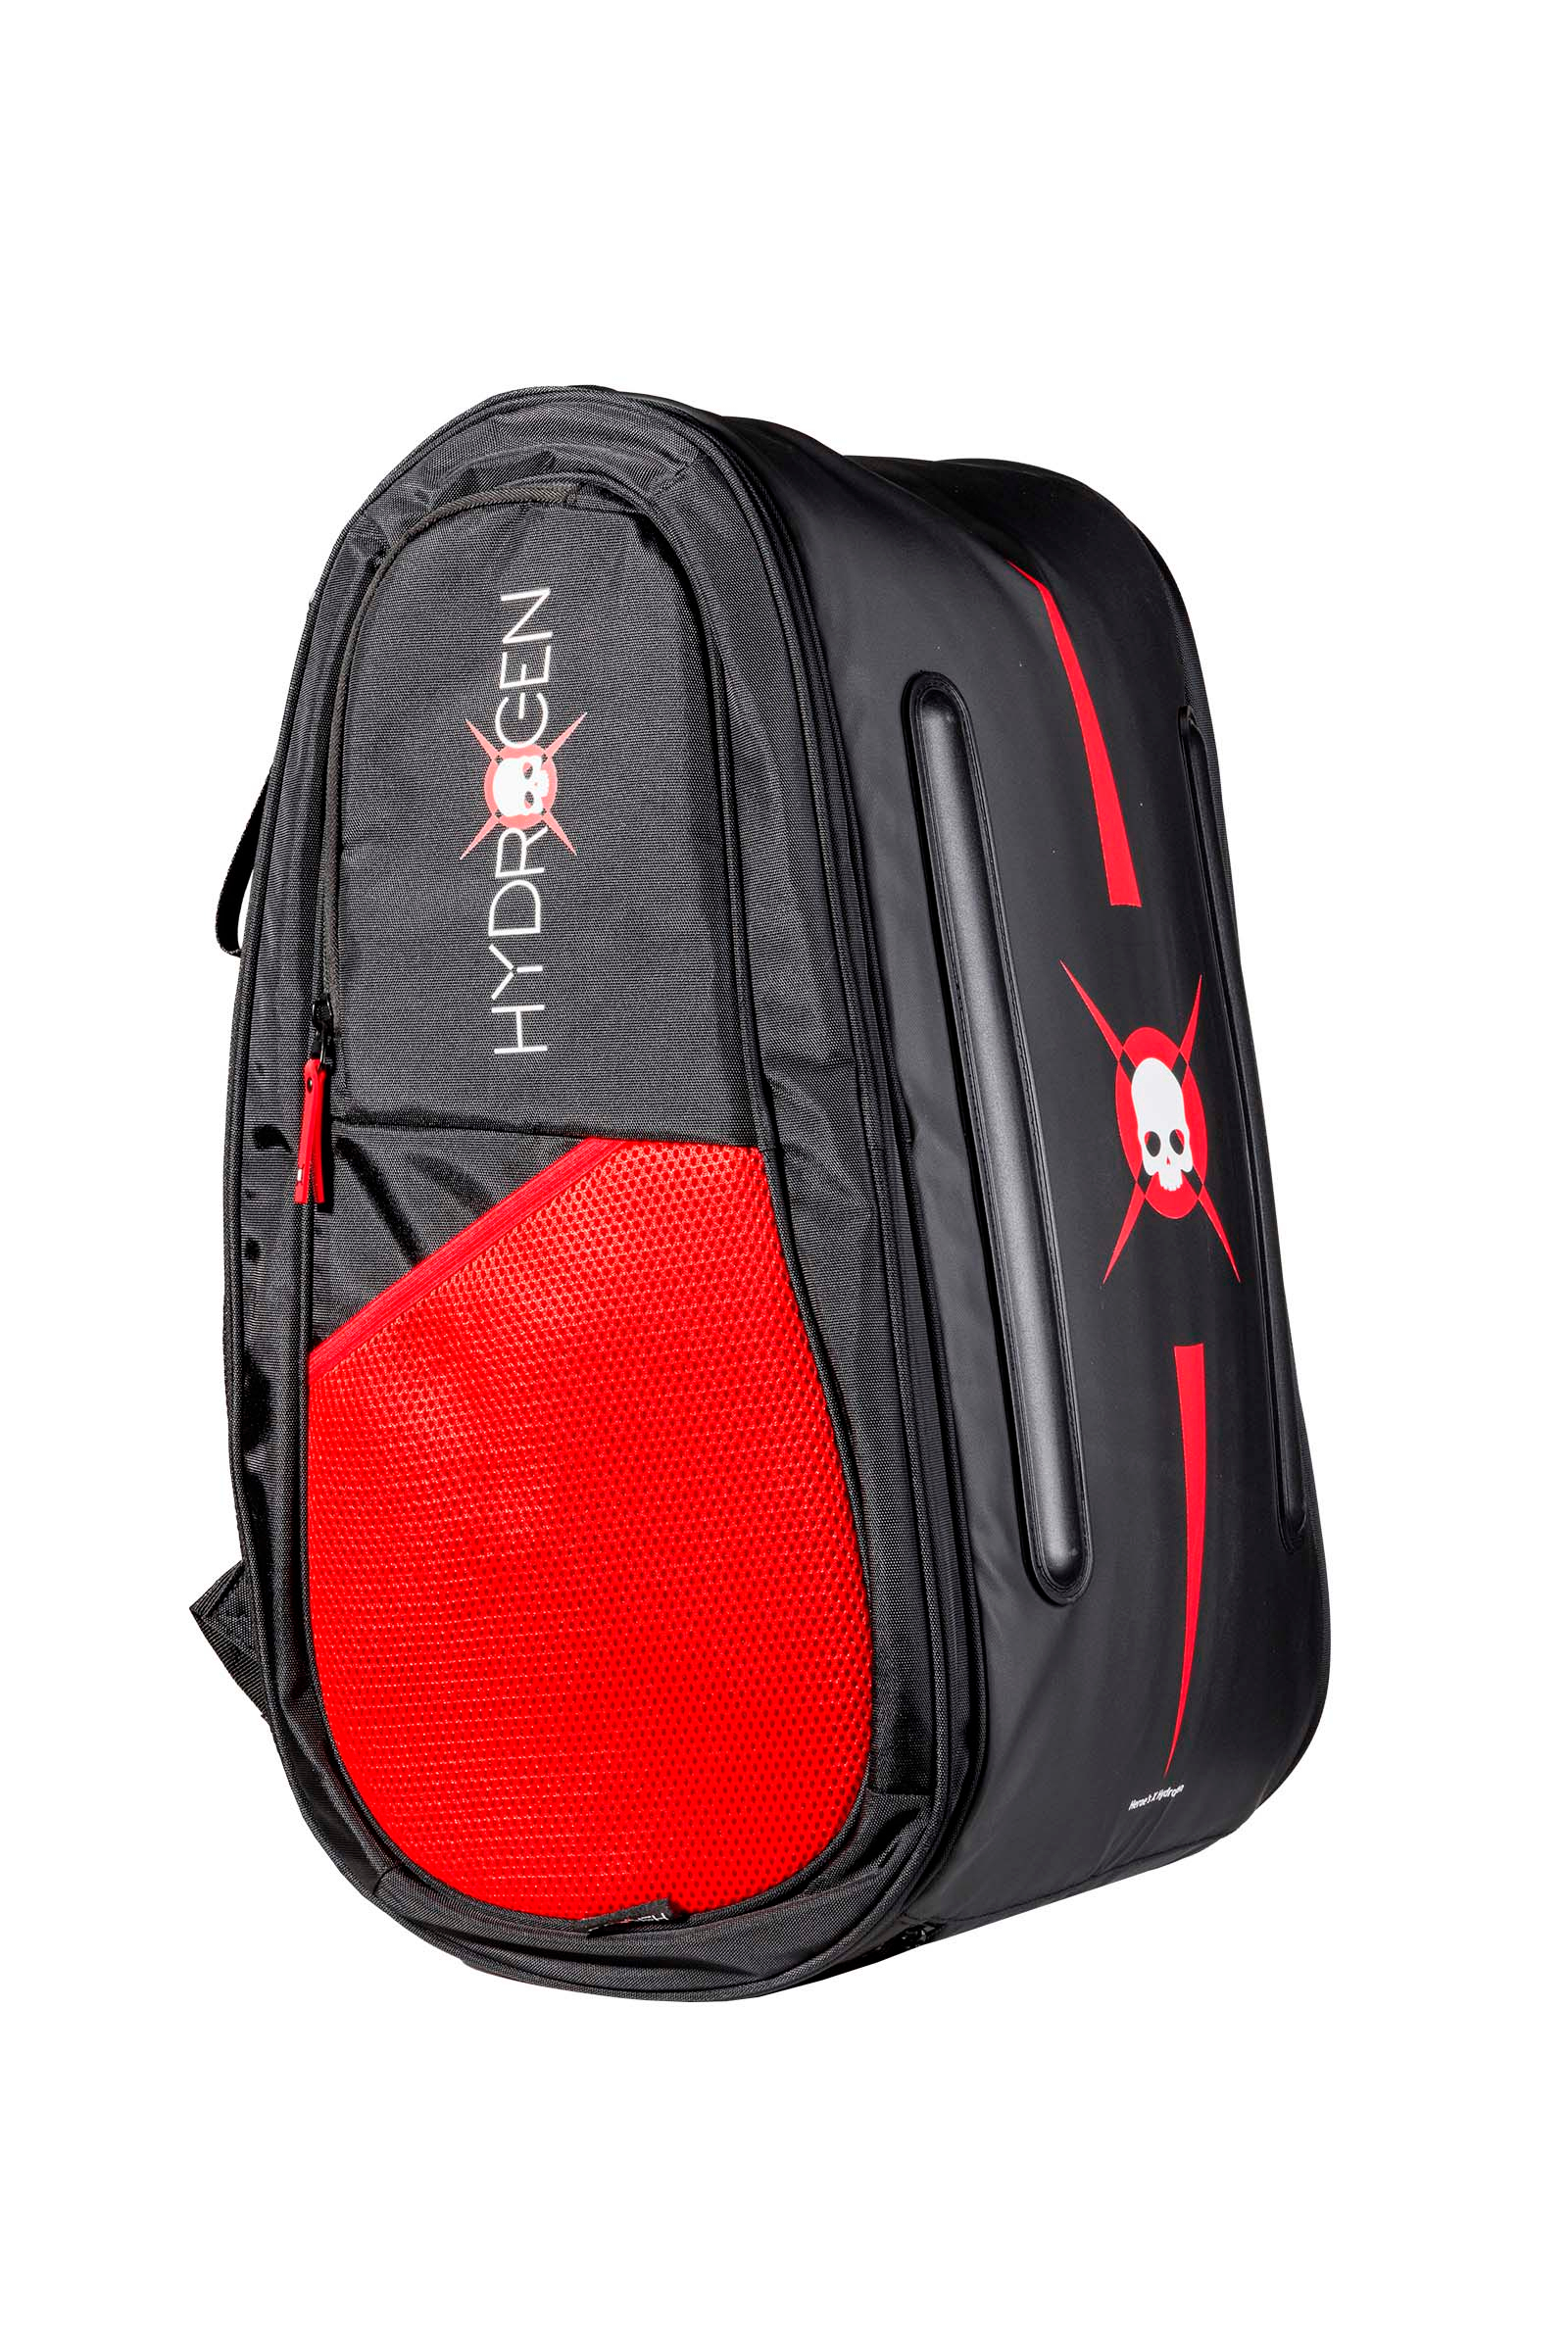 THUNDER HYDROGEN BAG - BLACK,RED - Hydrogen - Luxury Sportwear